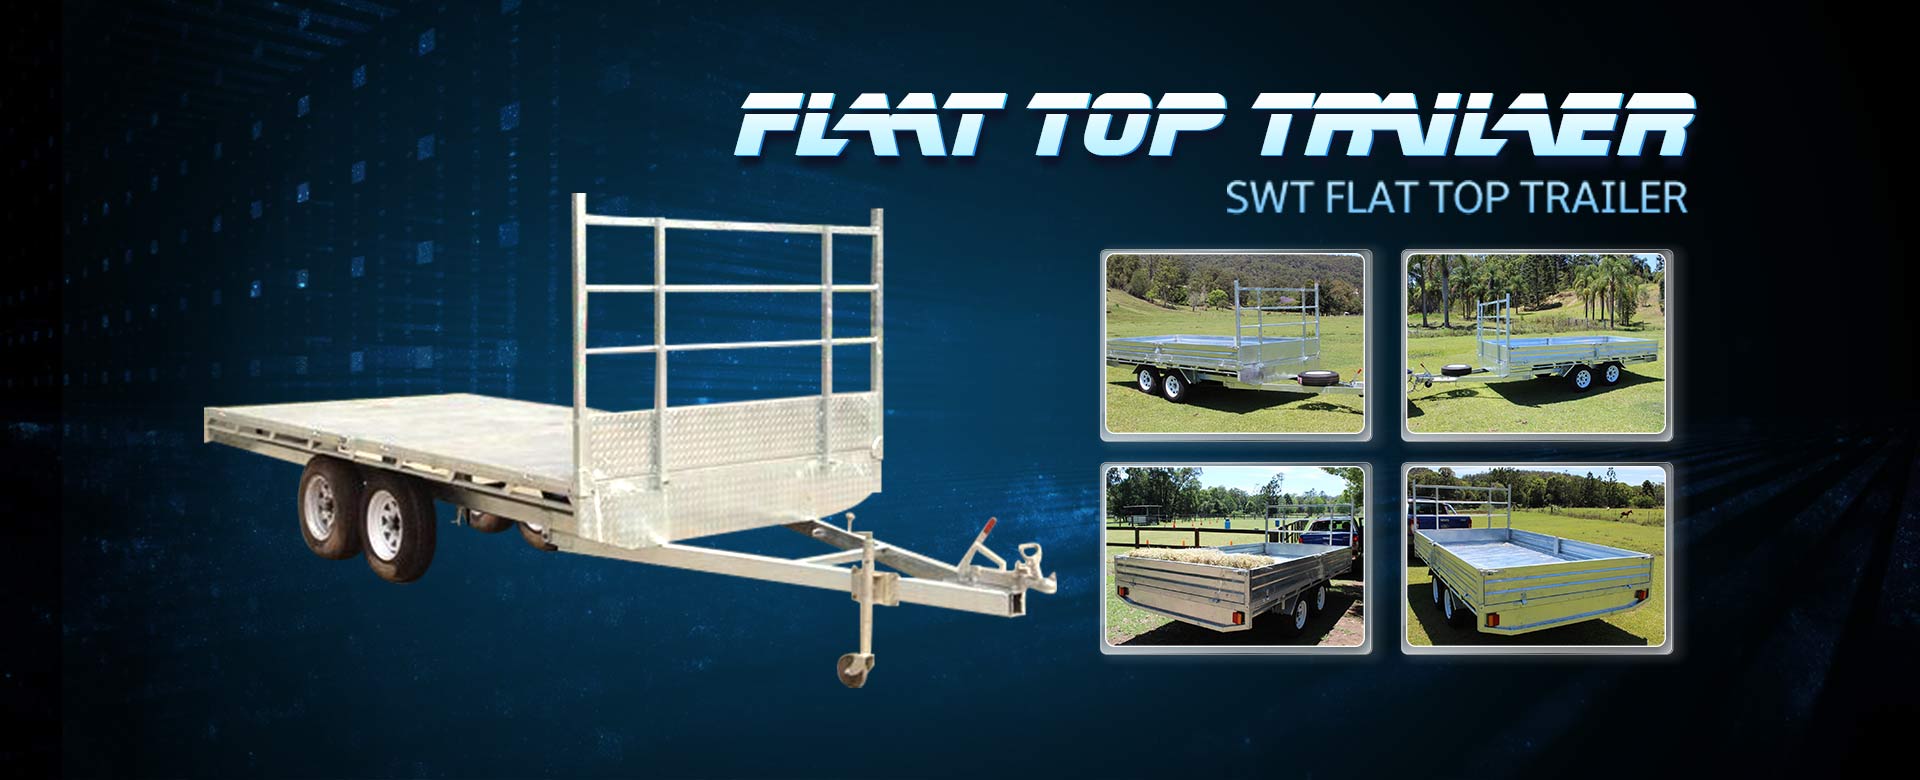 Flat top trailer